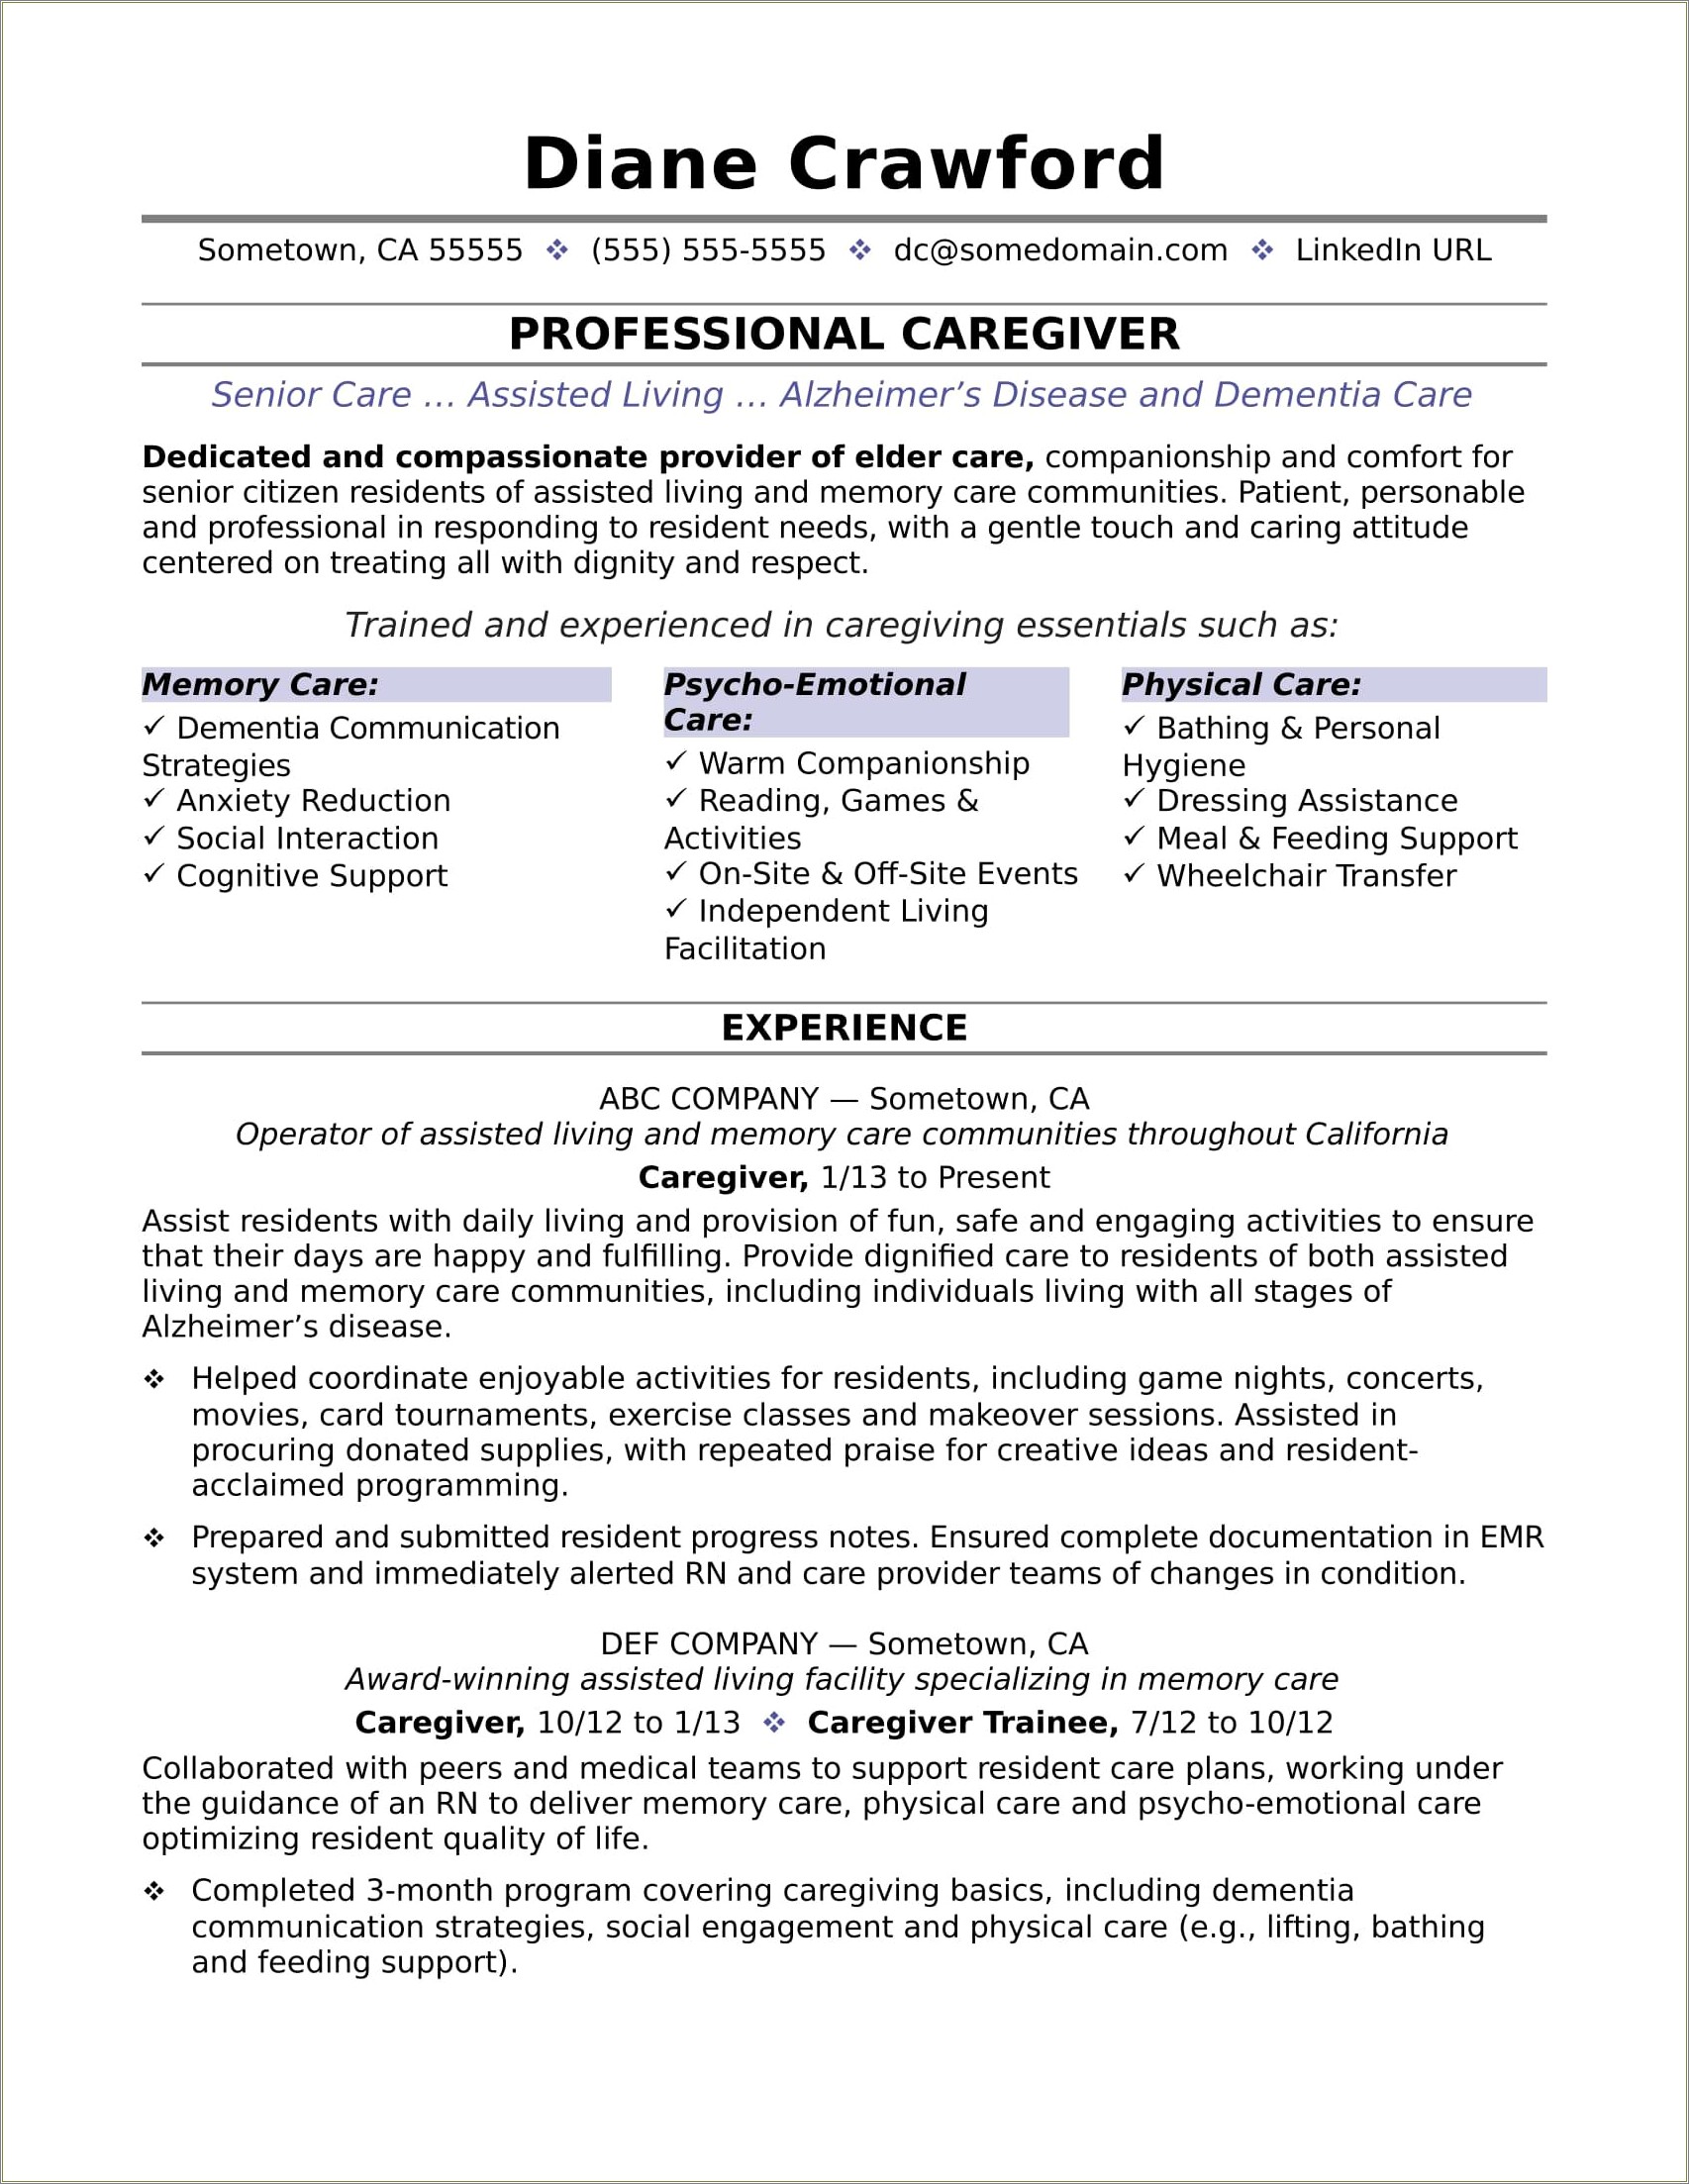 Resume Objectives For A Caregiver Position